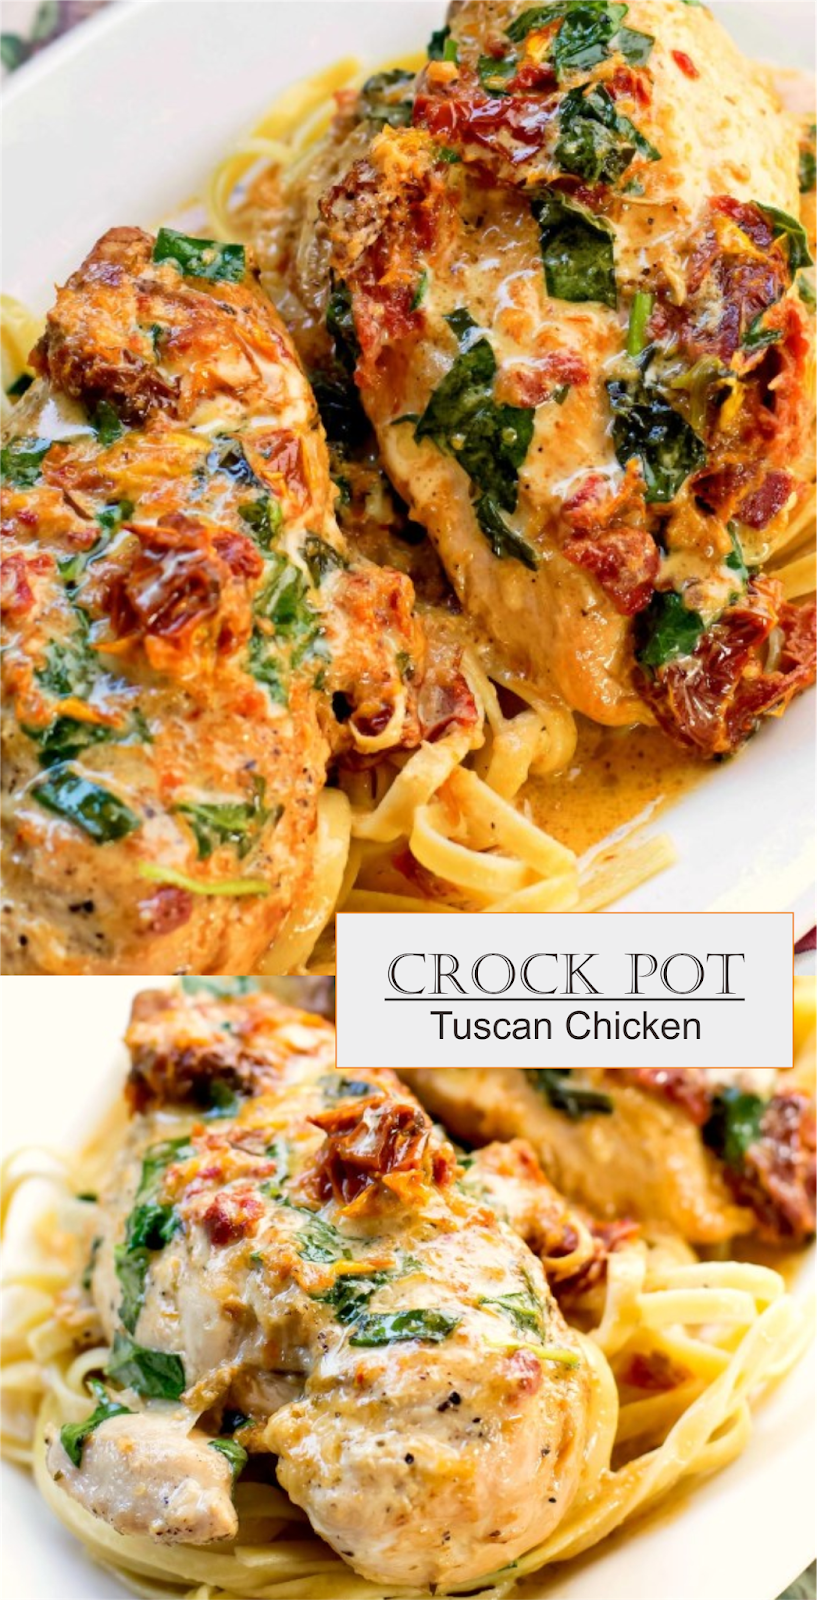 Crock Pot Tuscan Chicken | Think food